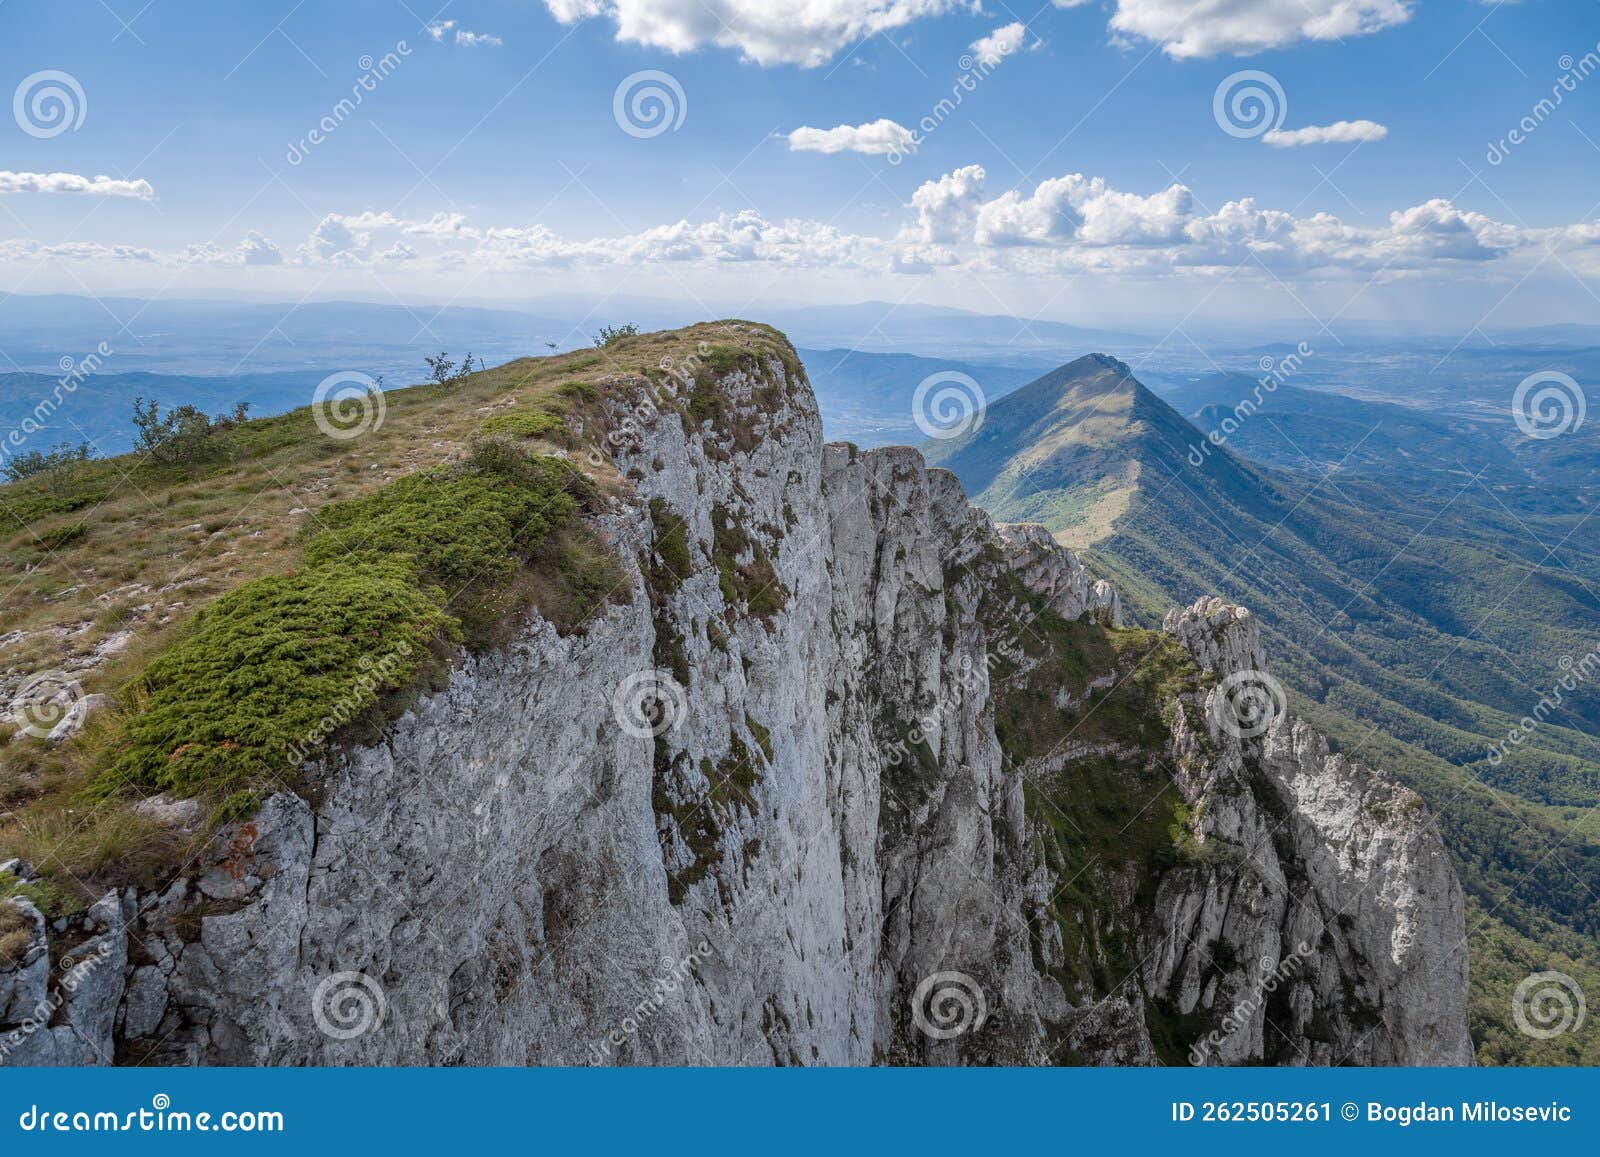 suva planina mountain ridge from trem peak, serbia